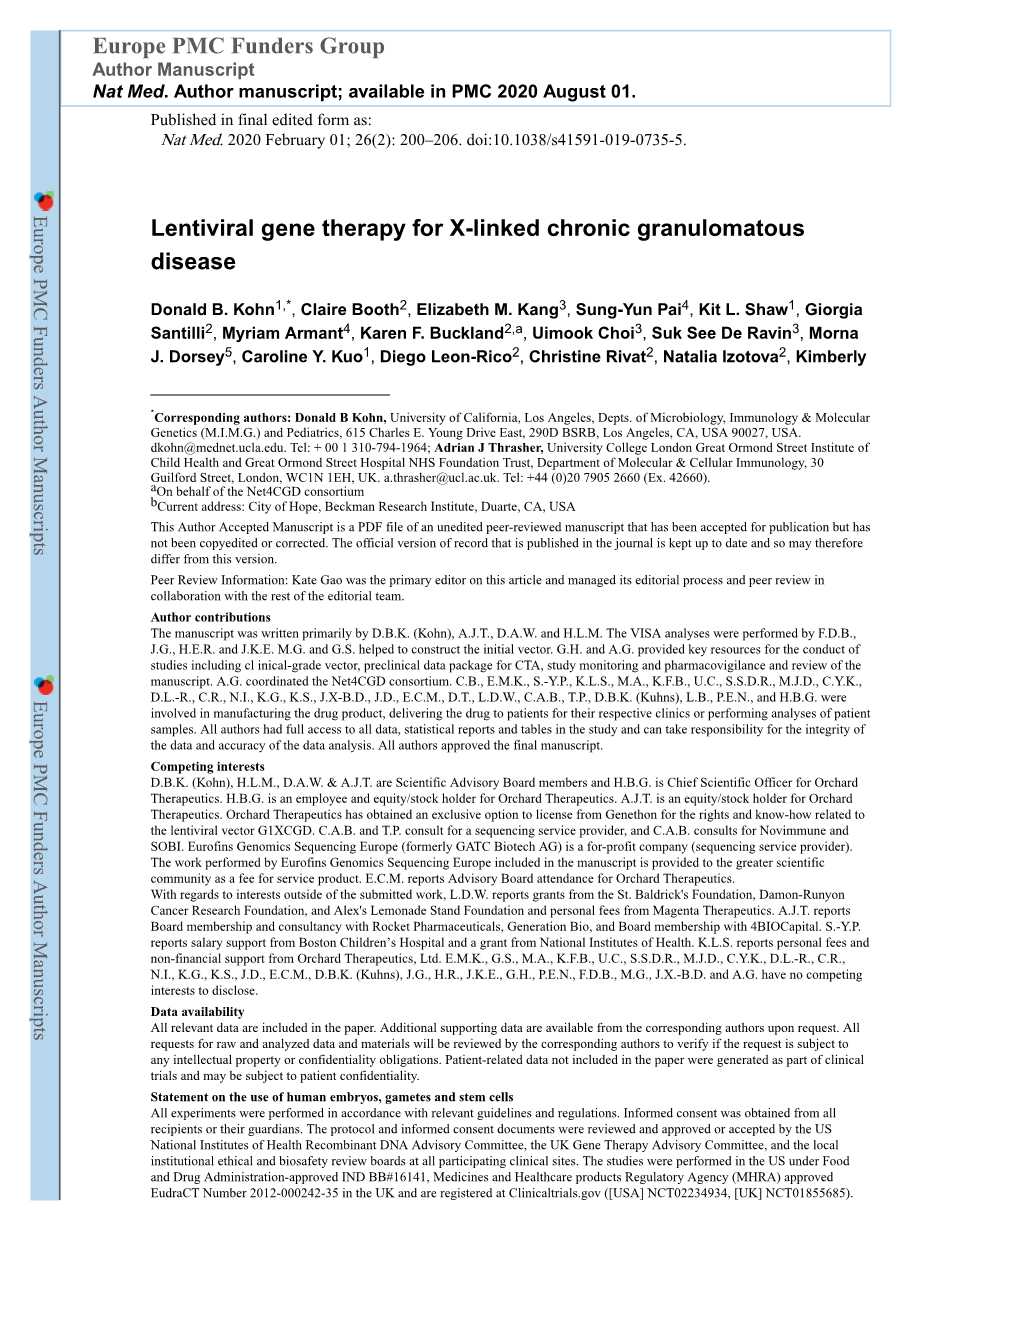 Lentiviral Gene Therapy for X-Linked Chronic Granulomatous Disease